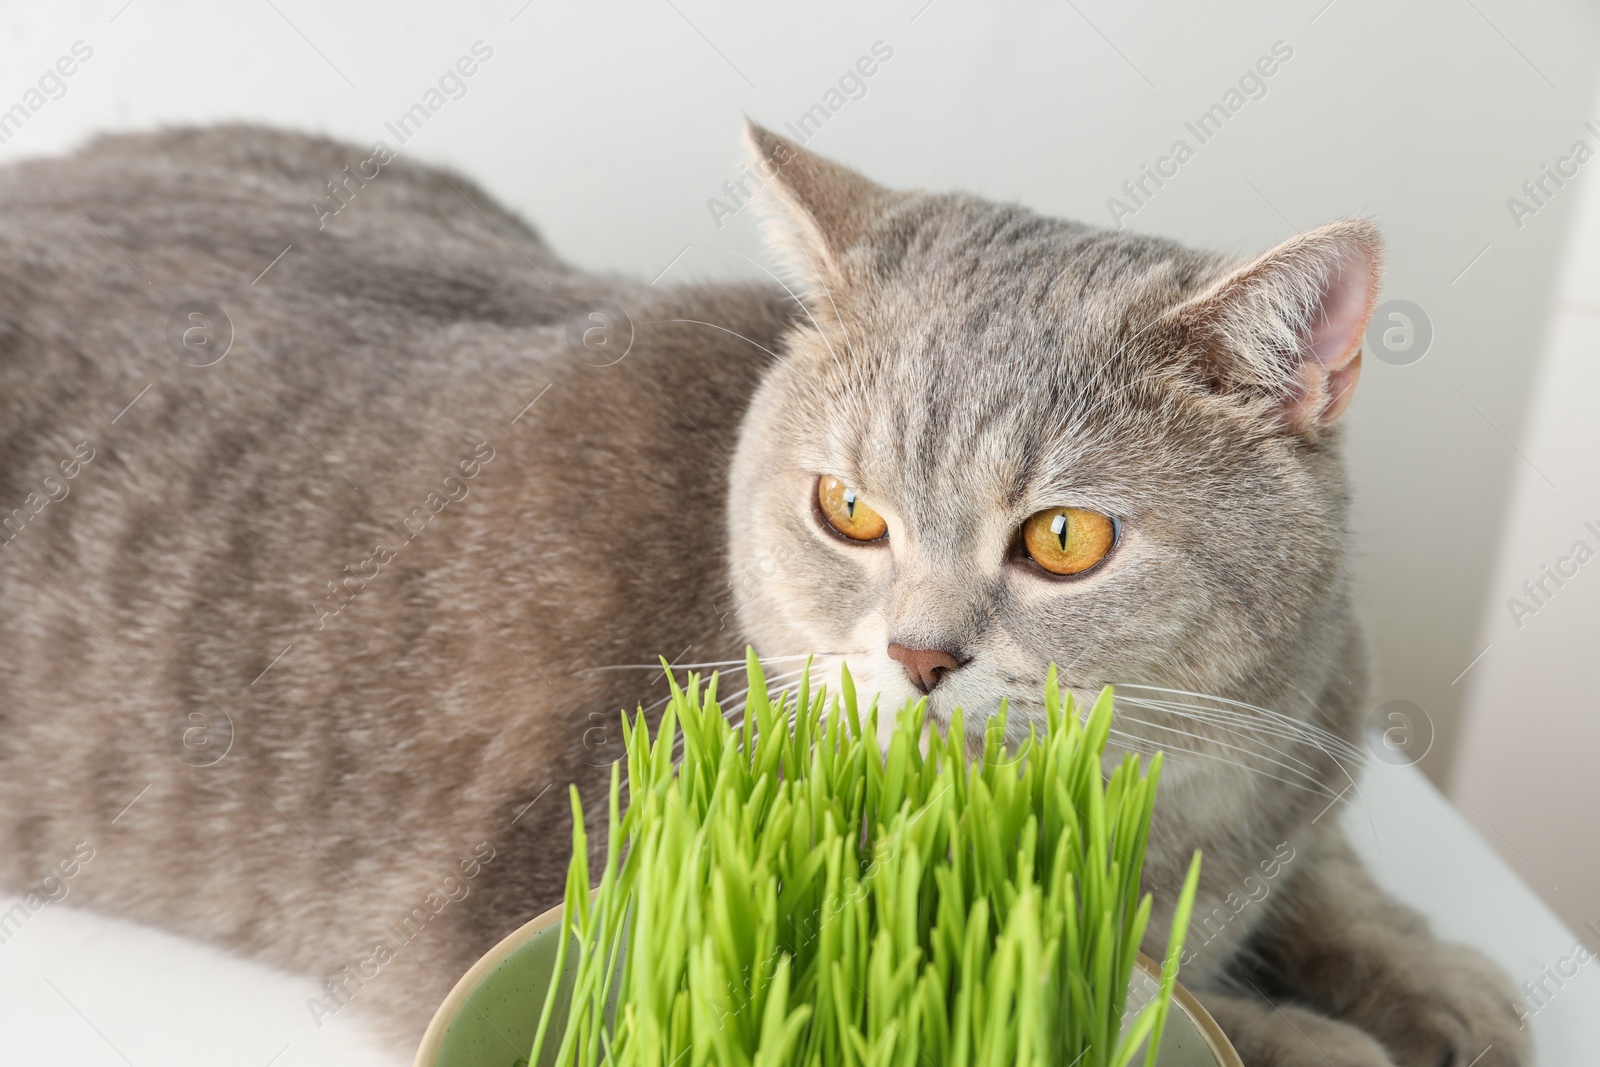 Photo of Cute cat and fresh green grass near white wall